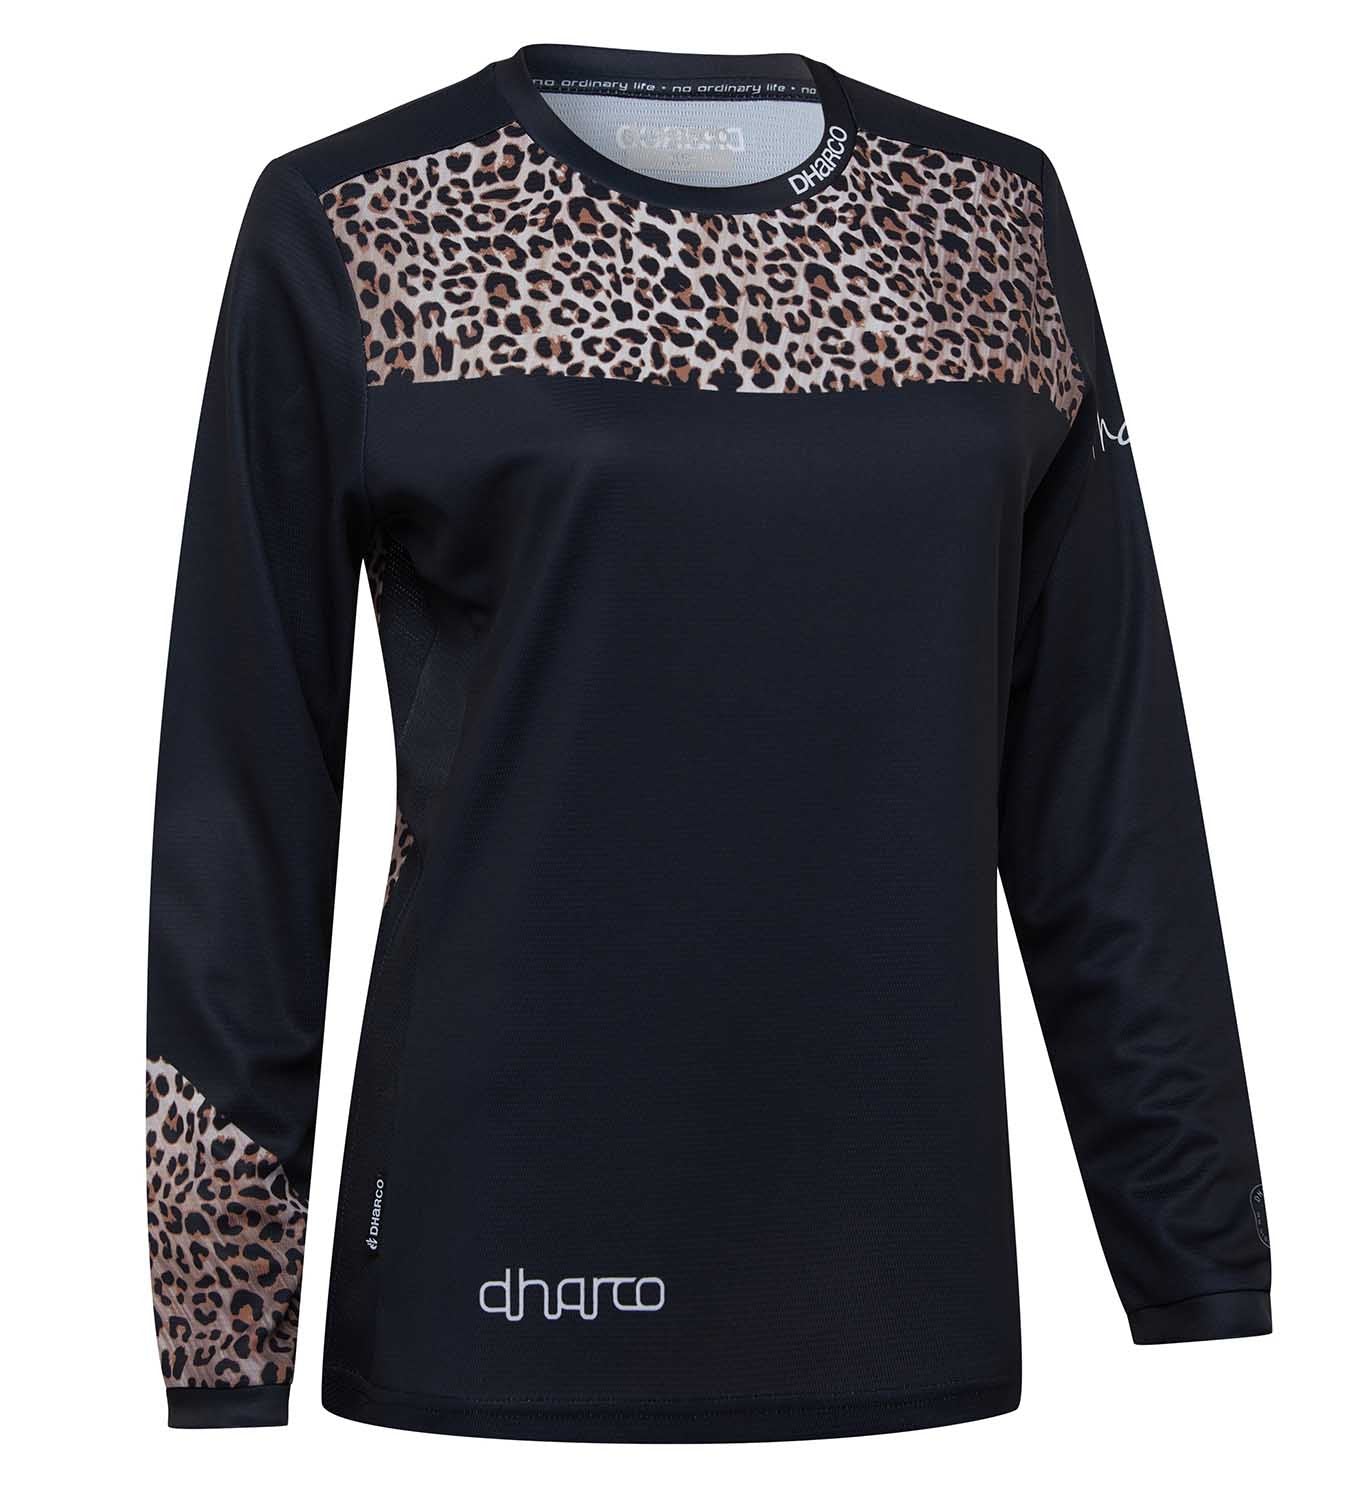 DHaRCO Womens Gravity Jersey Leopard